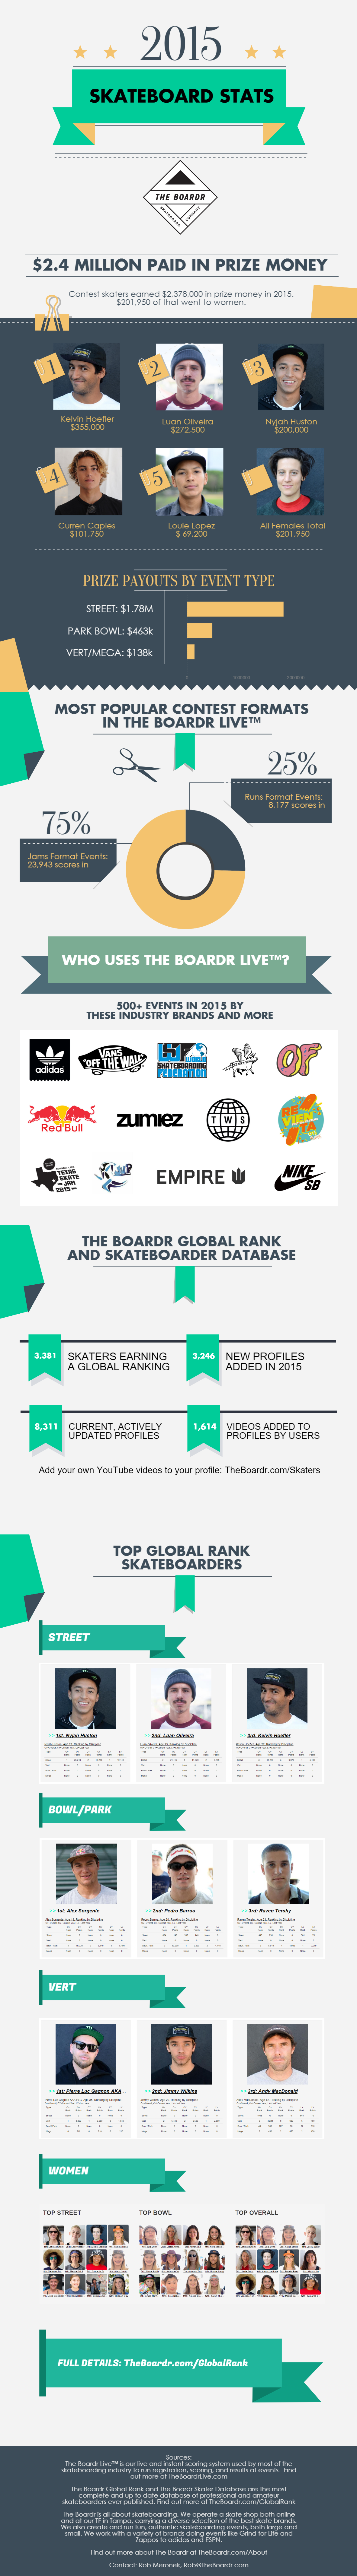 Skateboarding Industry Statistics and Contest Earnings 2015, Global Rankings